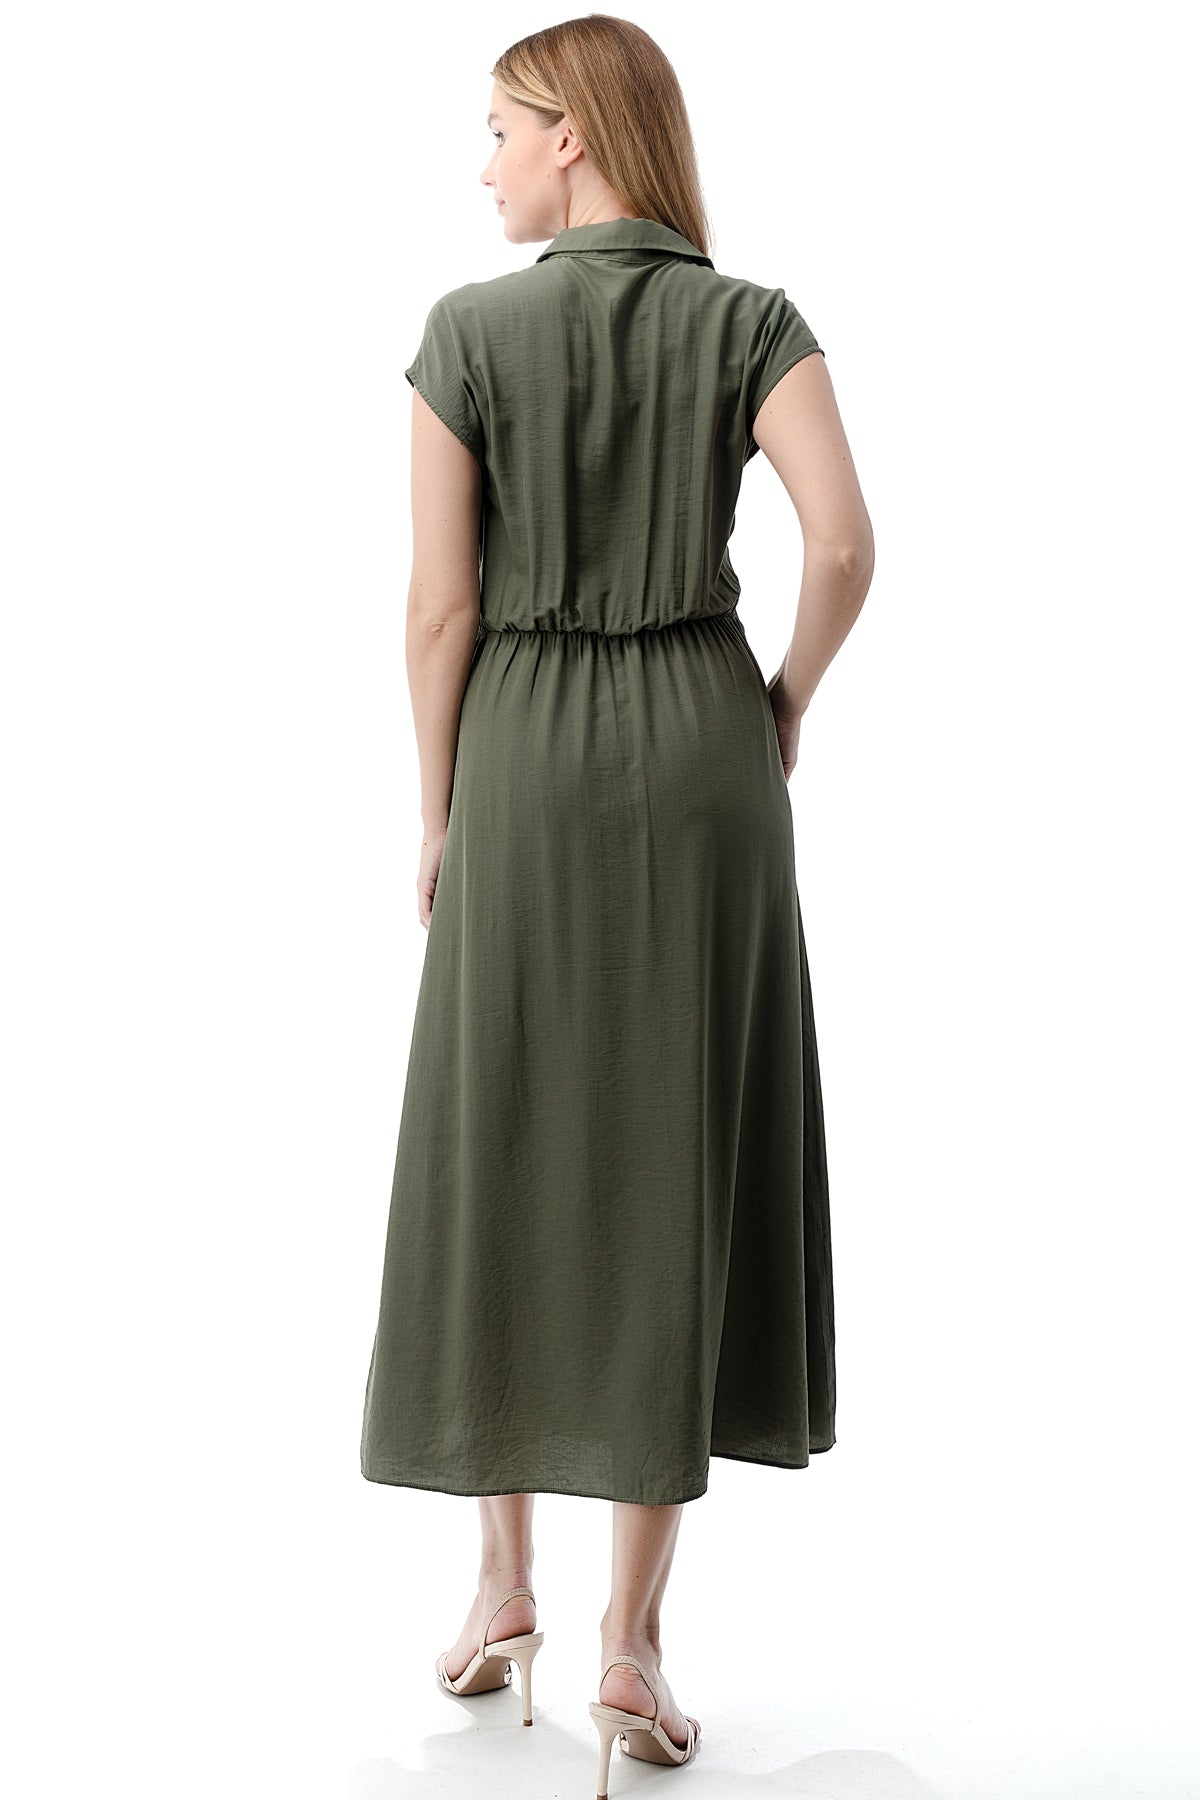 EDGY Land Girl's and Women's Cap Sleeve Collared Flowey Tea-length Dress with Waist Tie